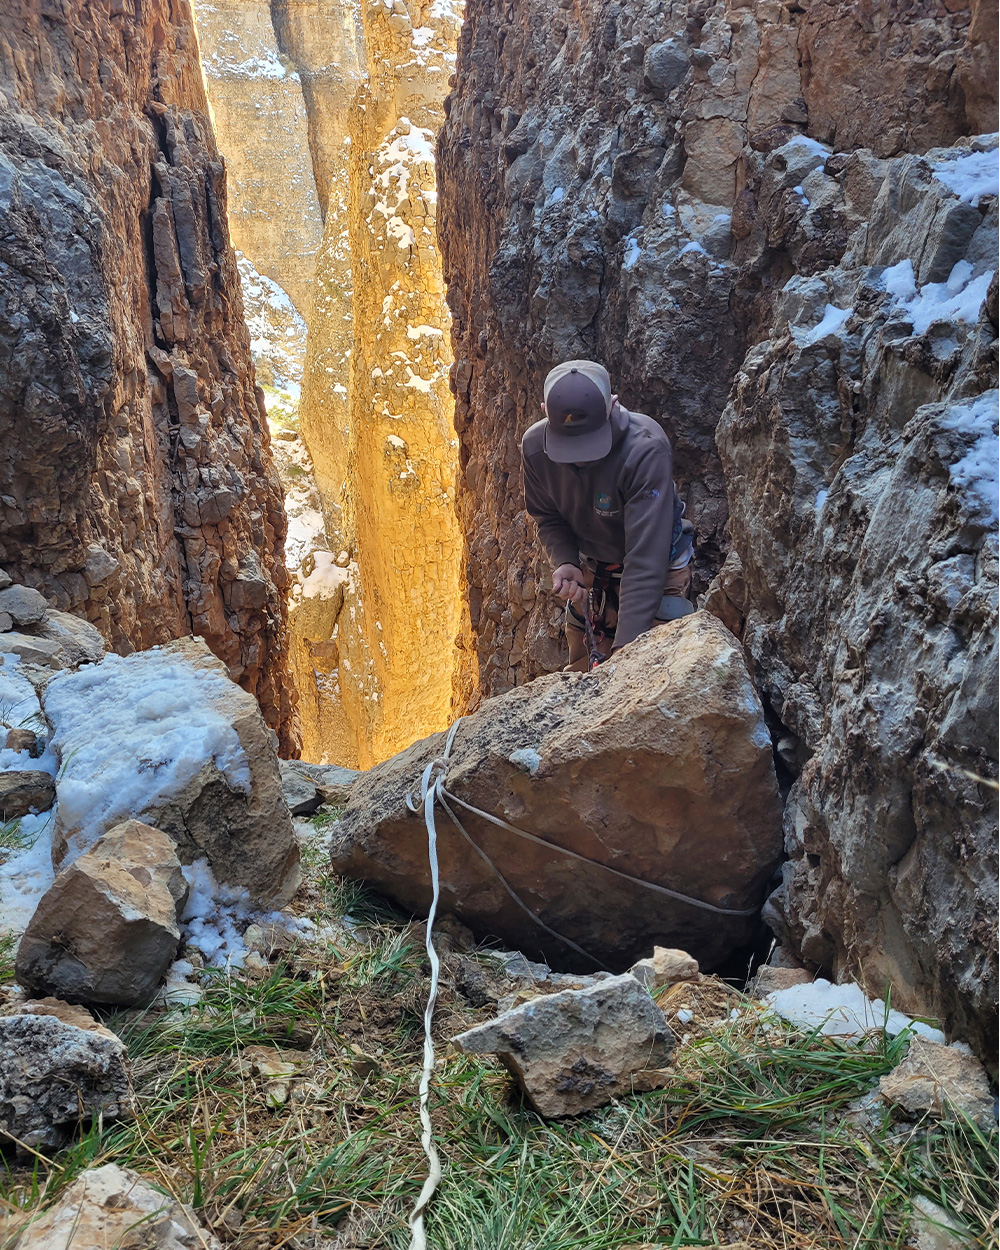 A man prepares to rappel down into a canyon.